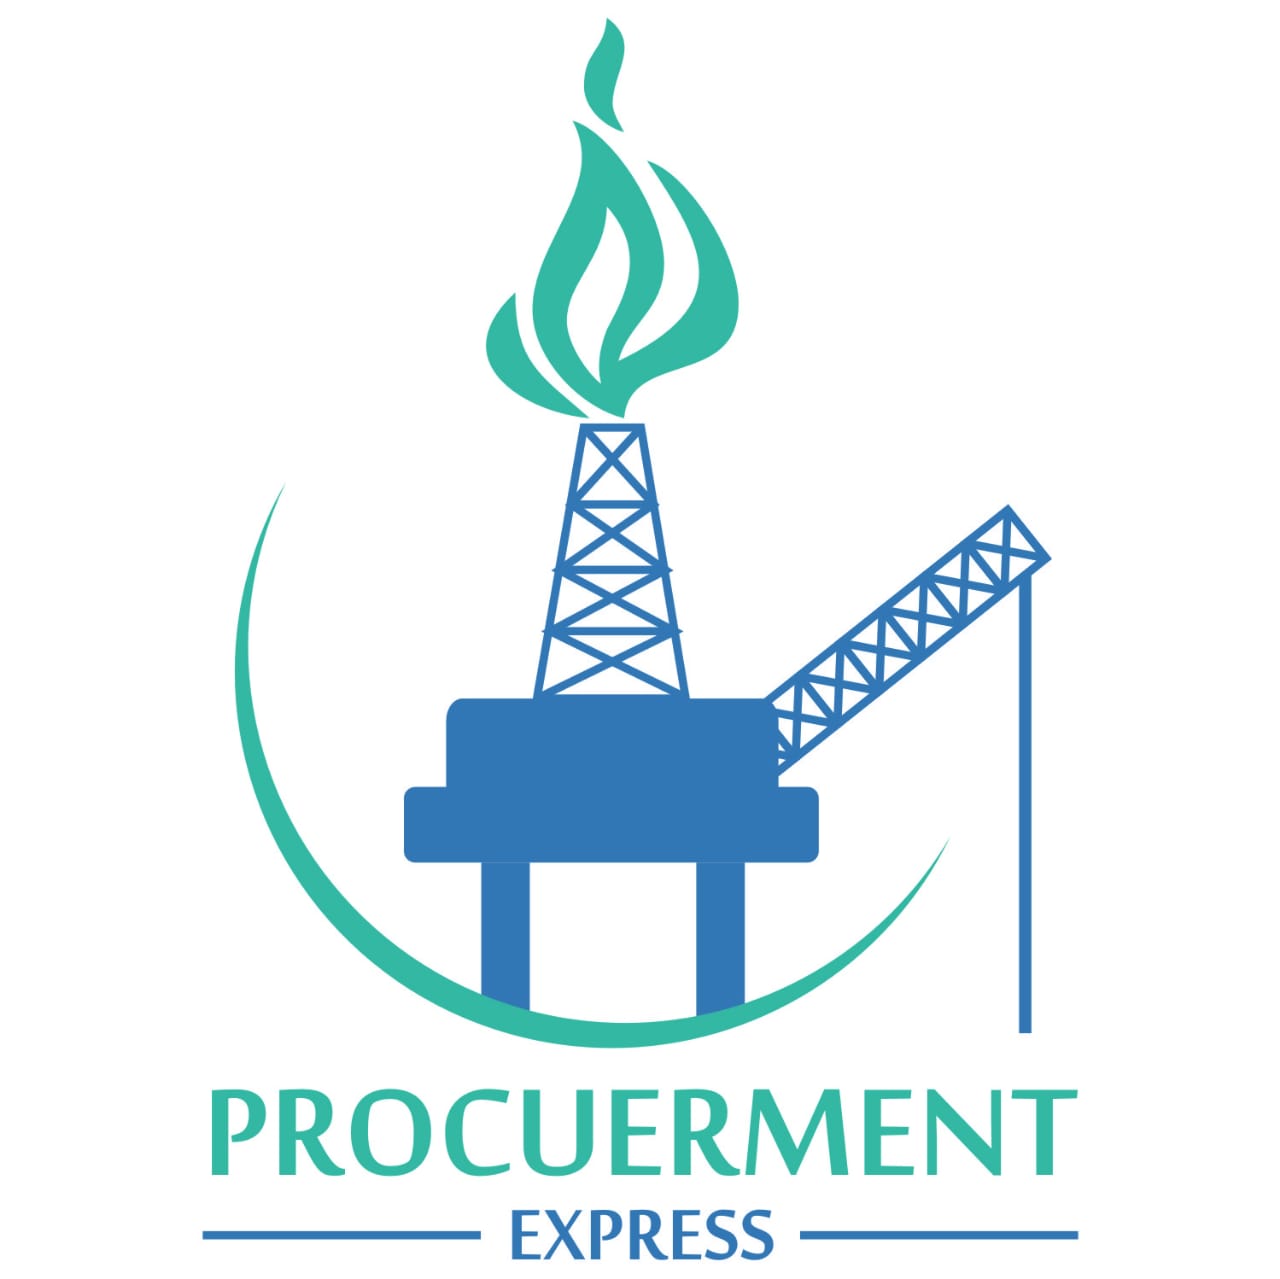 The Art of Oil & Gas Procurement